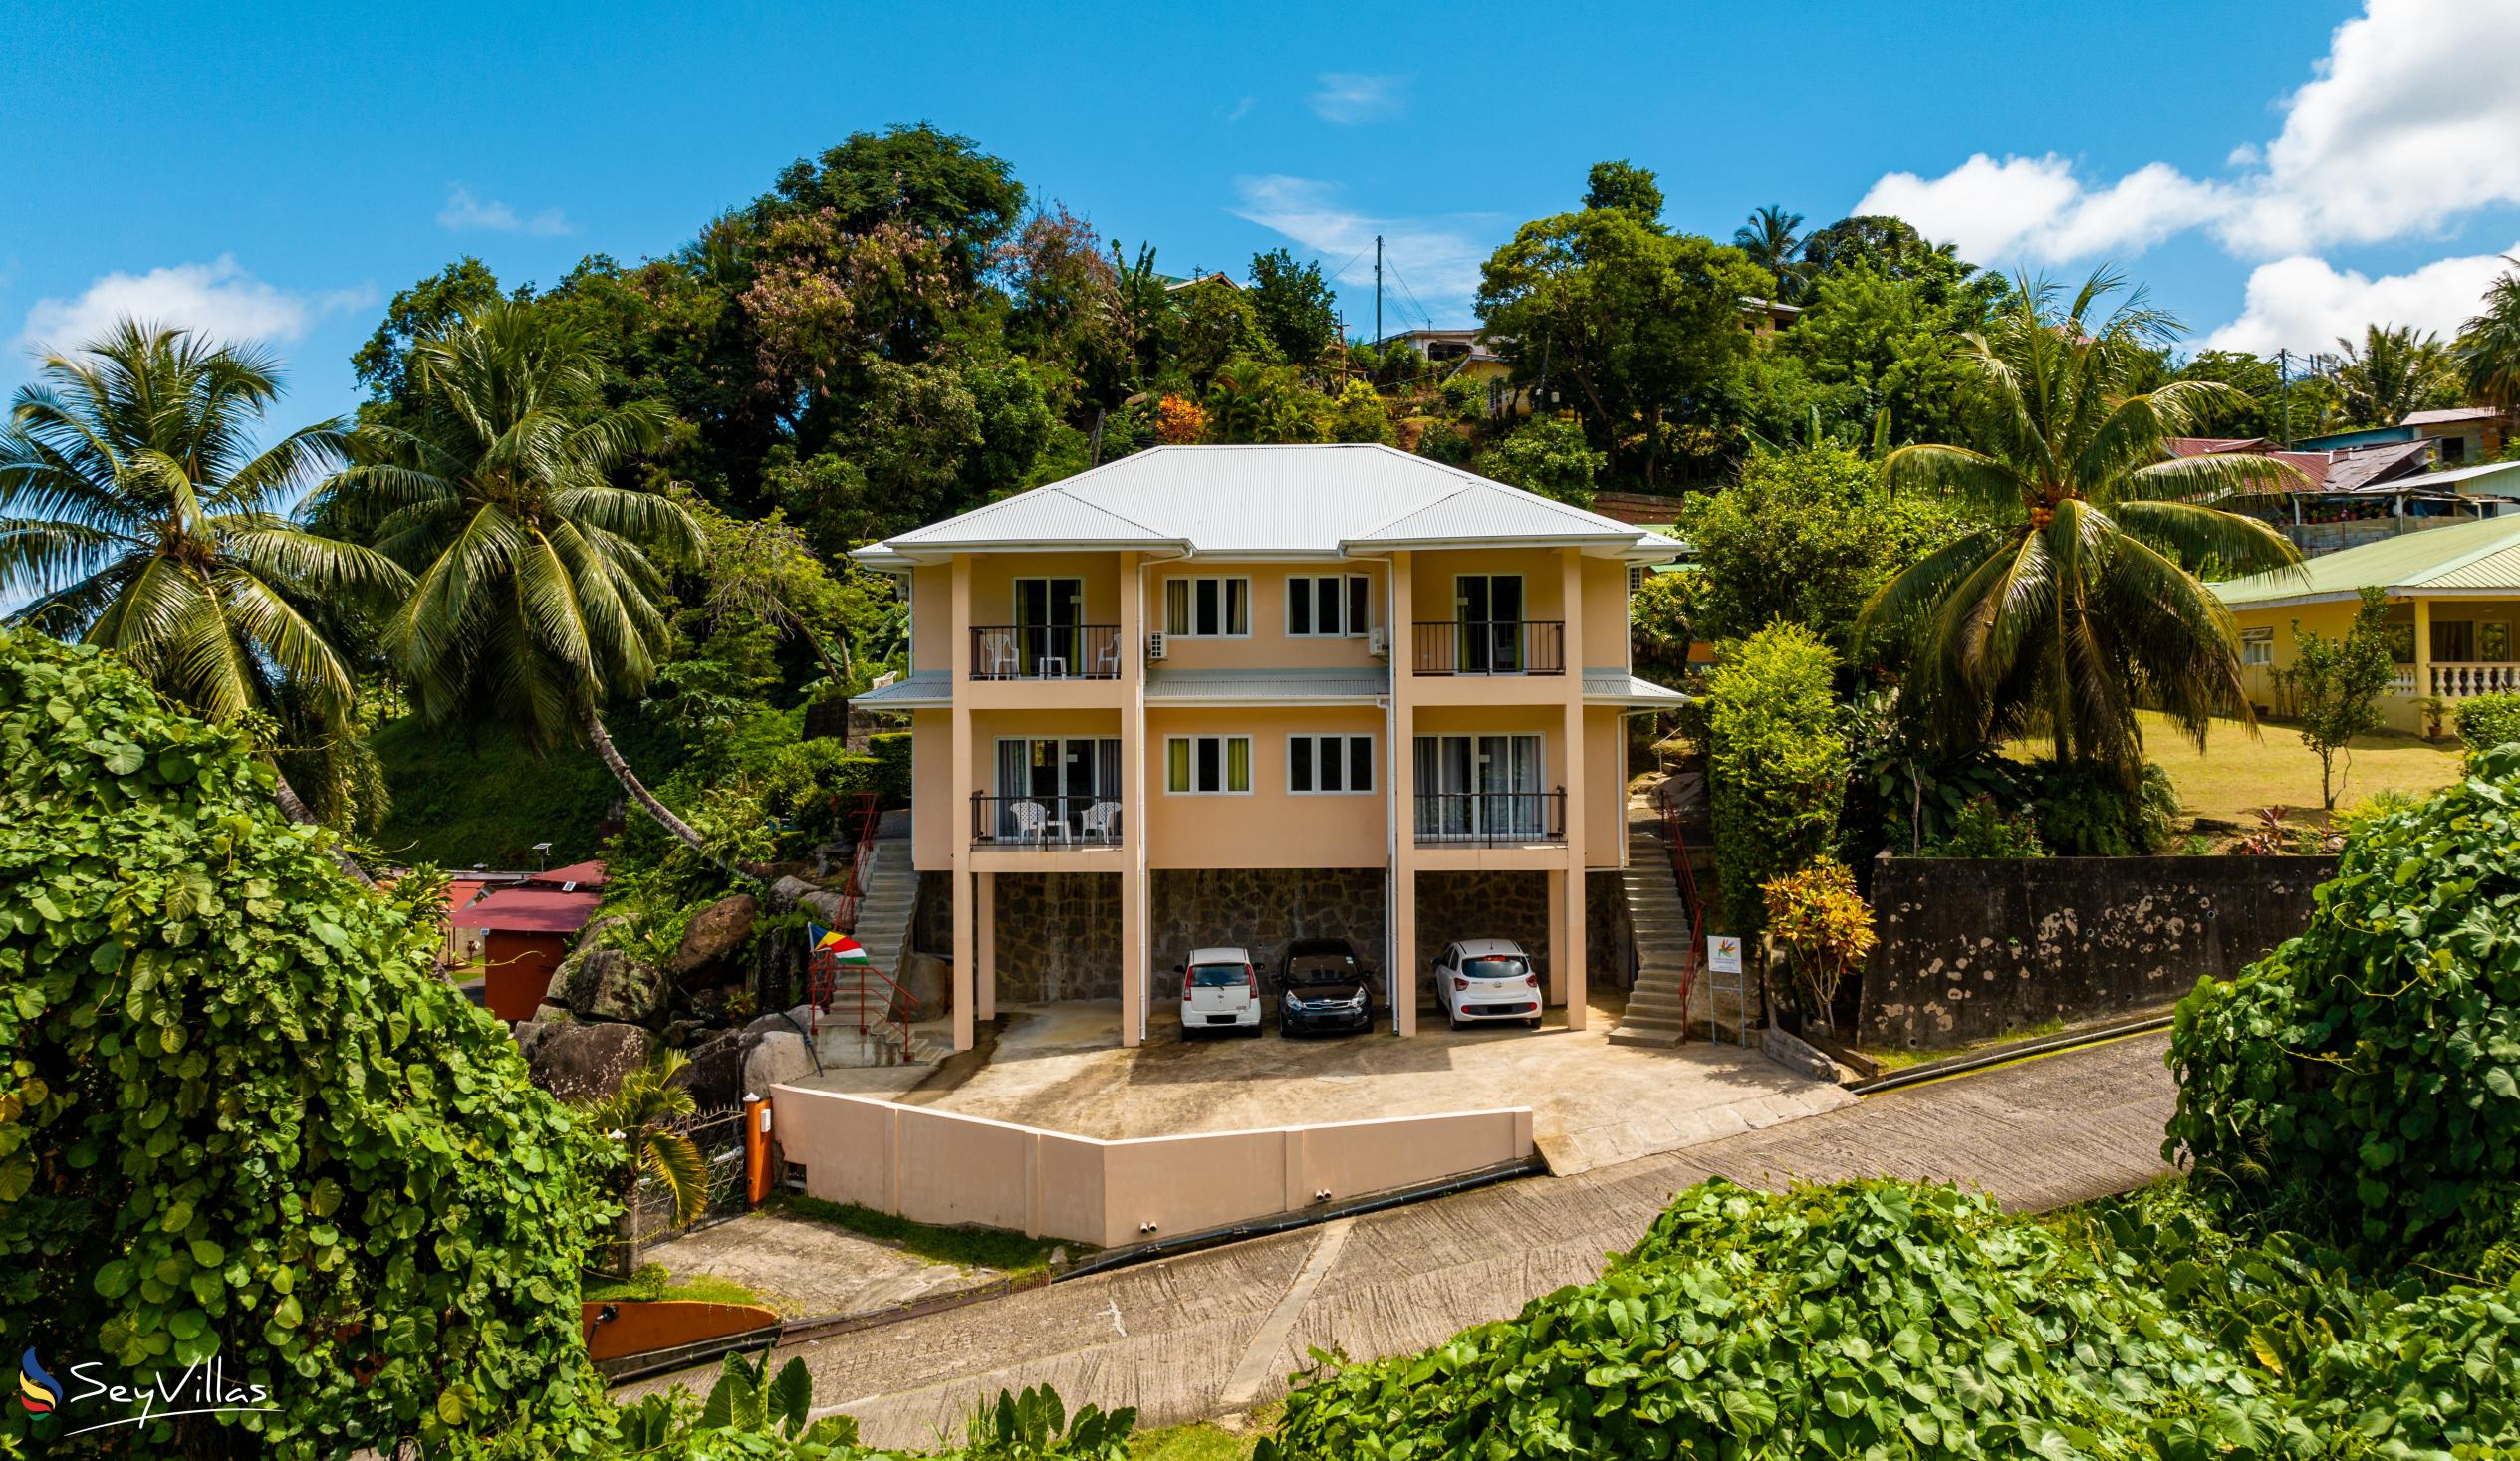 Foto 9: JAIDSS Holiday Apartments - Aussenbereich - Mahé (Seychellen)